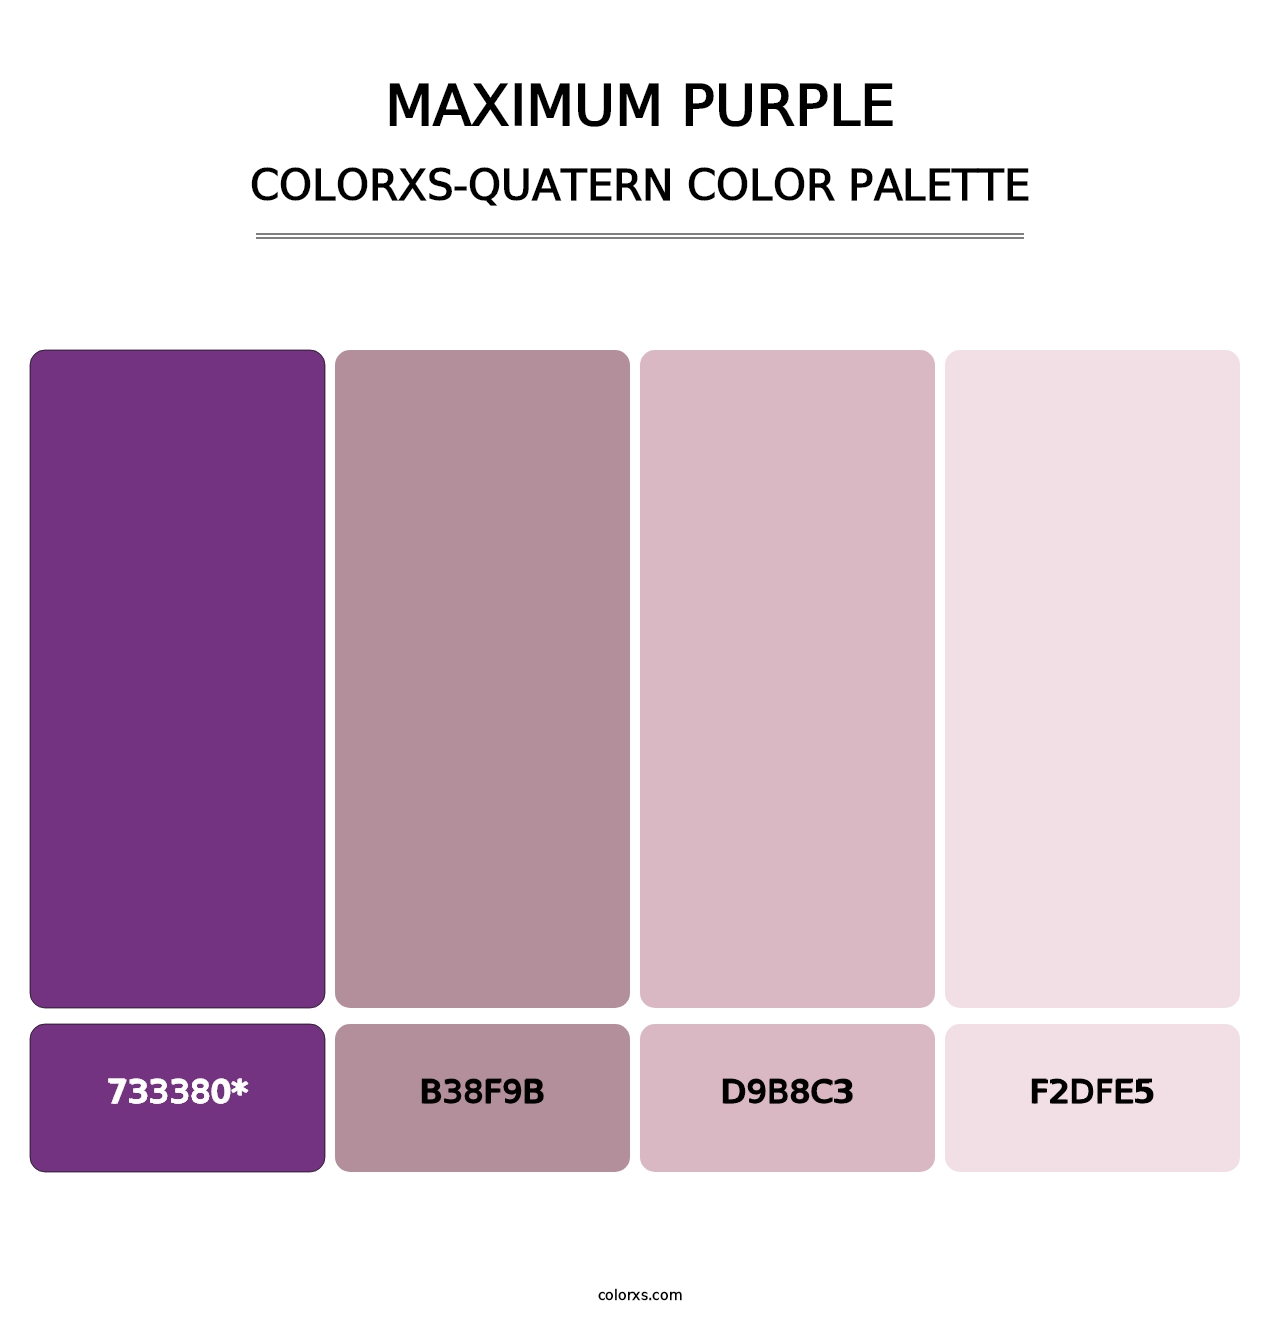 Maximum Purple - Colorxs Quatern Palette